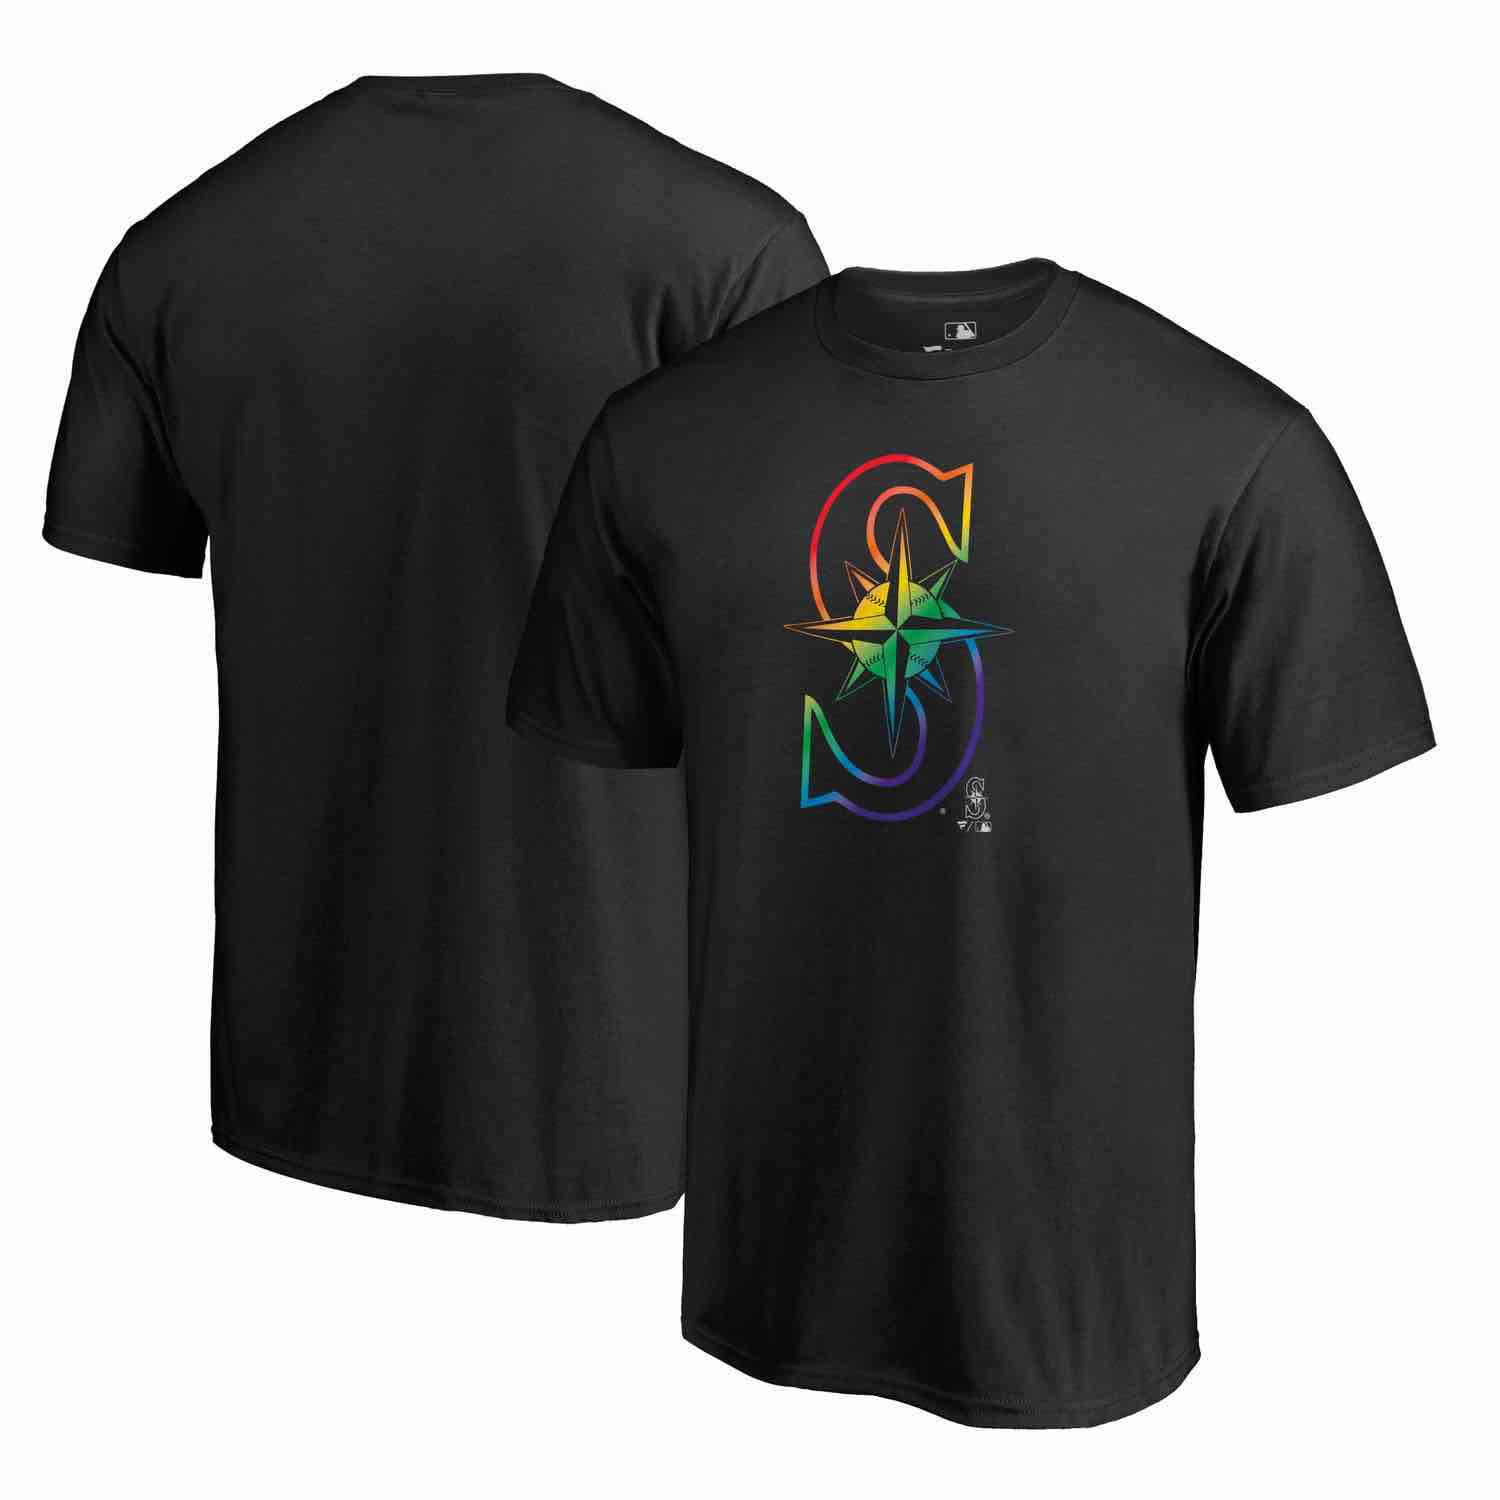 Mens Seattle Mariners Fanatics Branded Pride Black T-Shirt